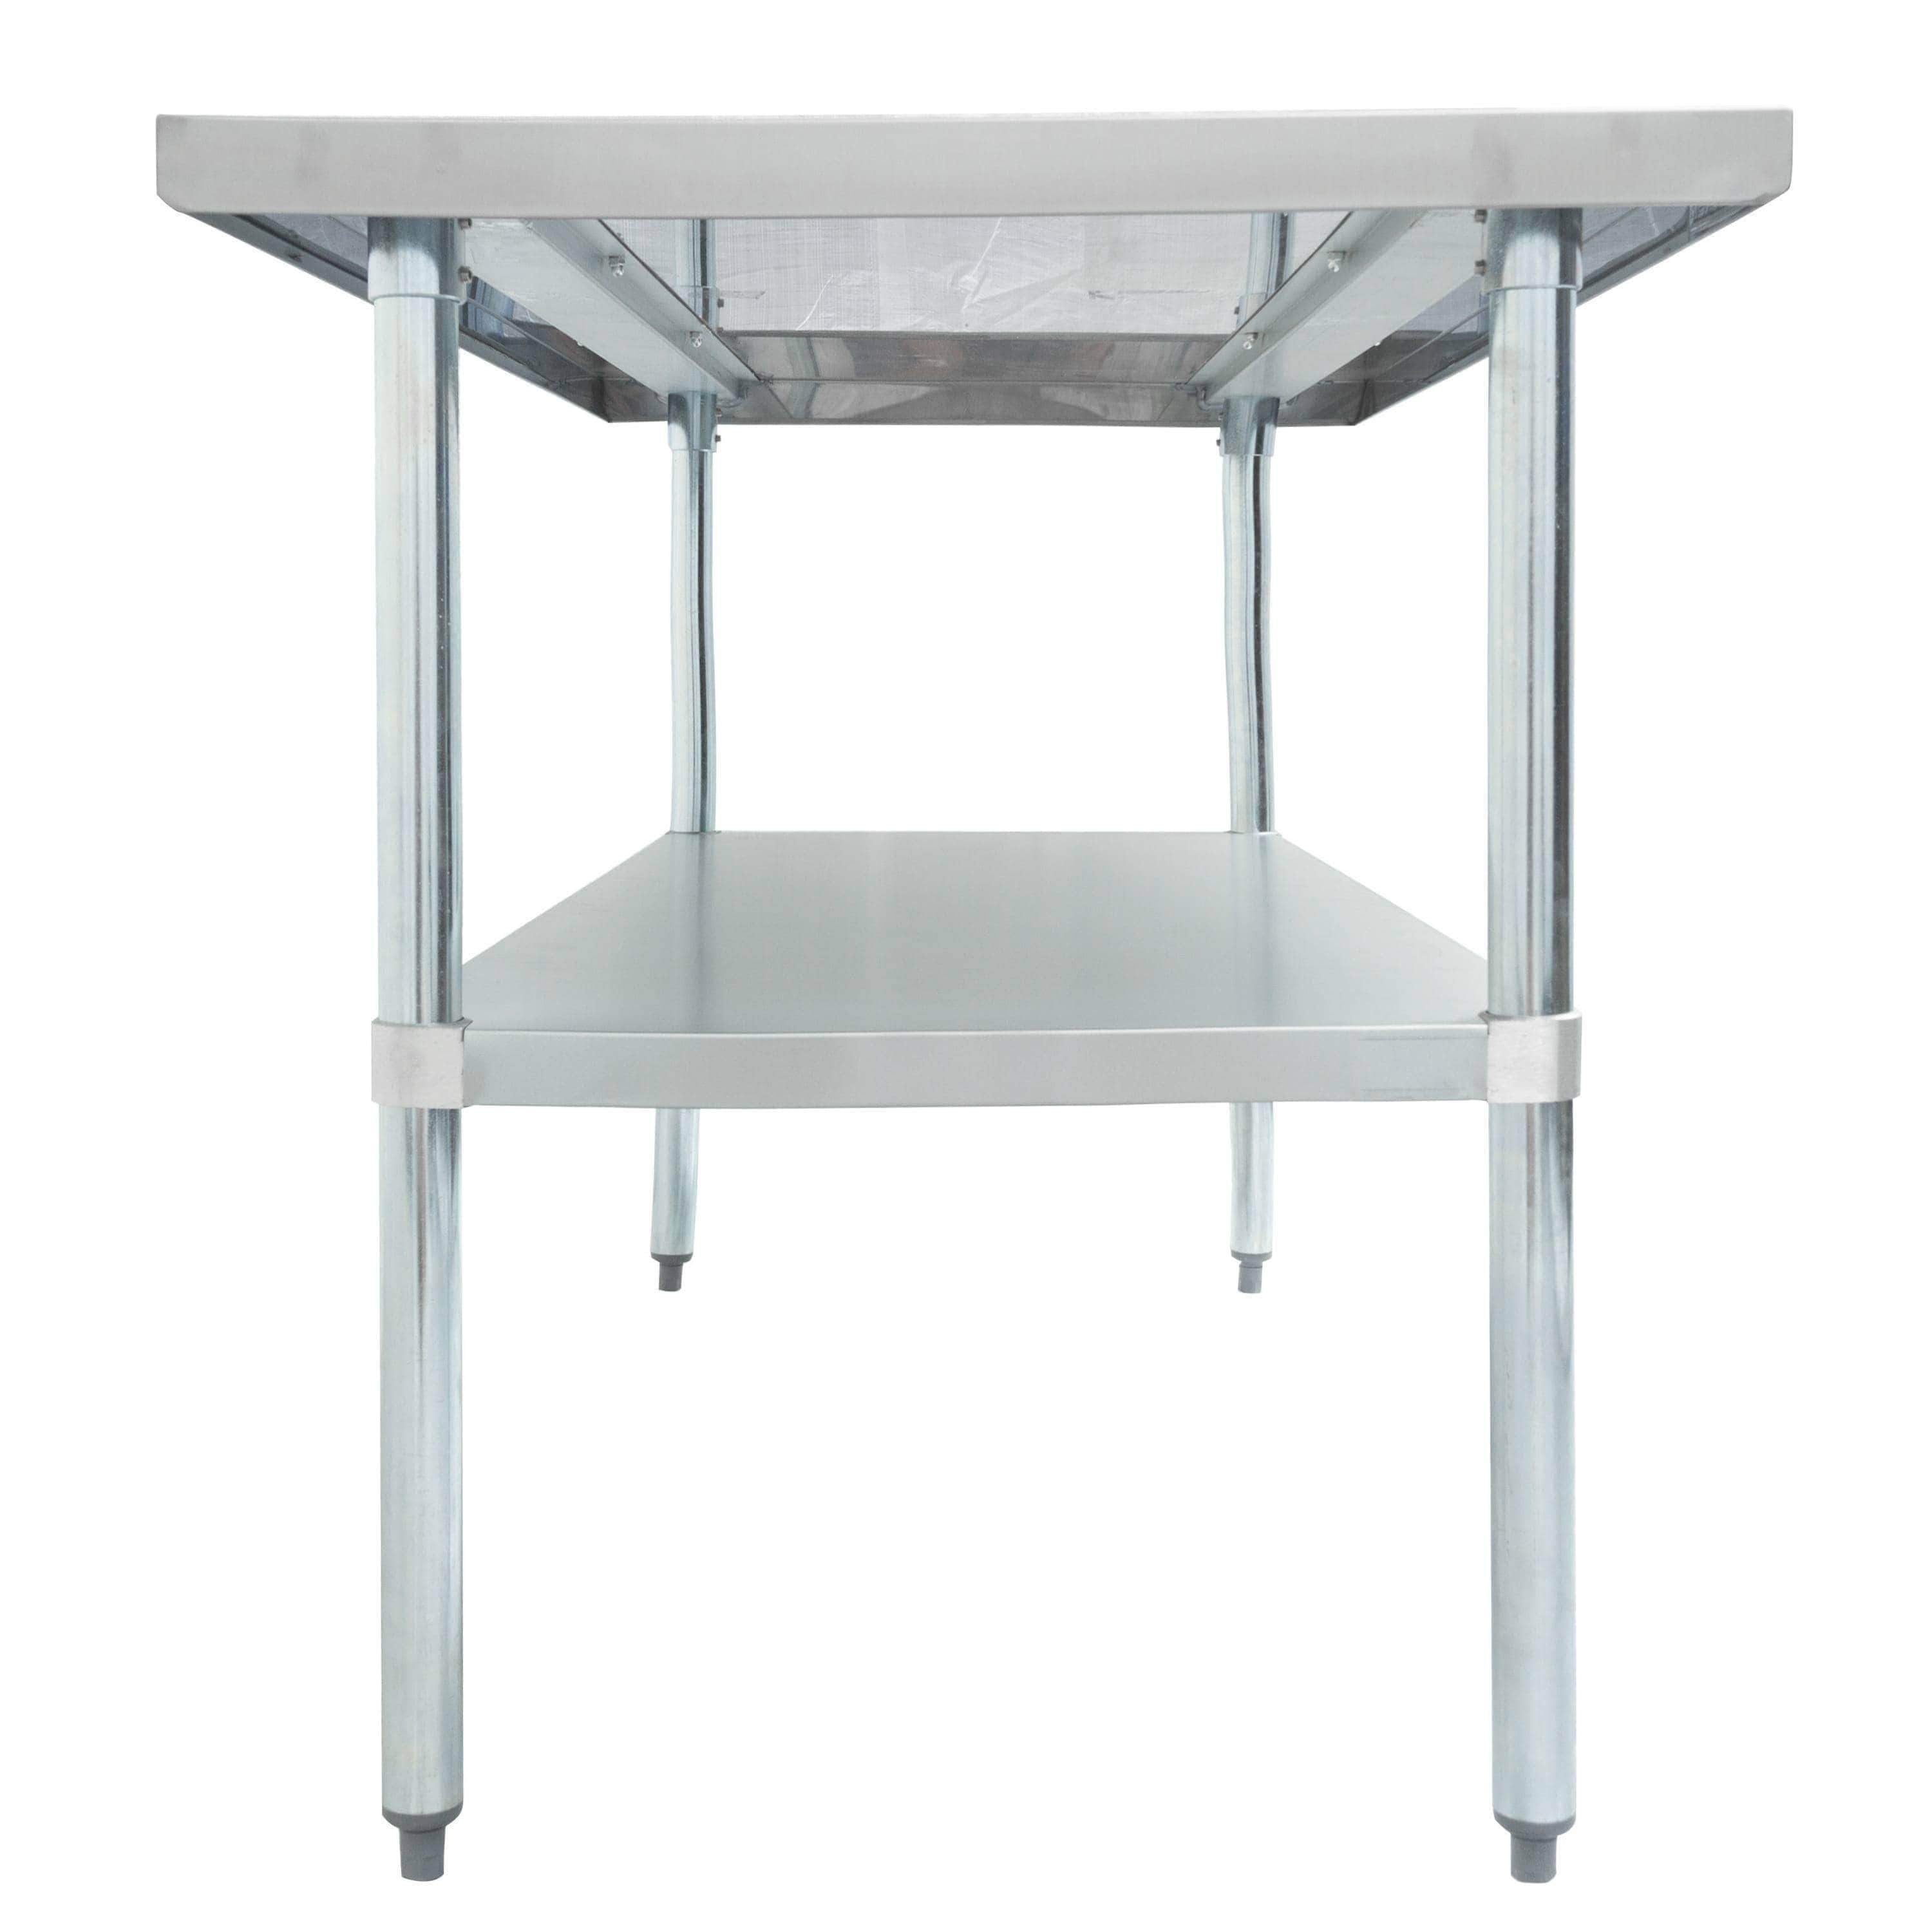 Thorinox - Stainless Steel Work Table with Undershelf - 30" Deep